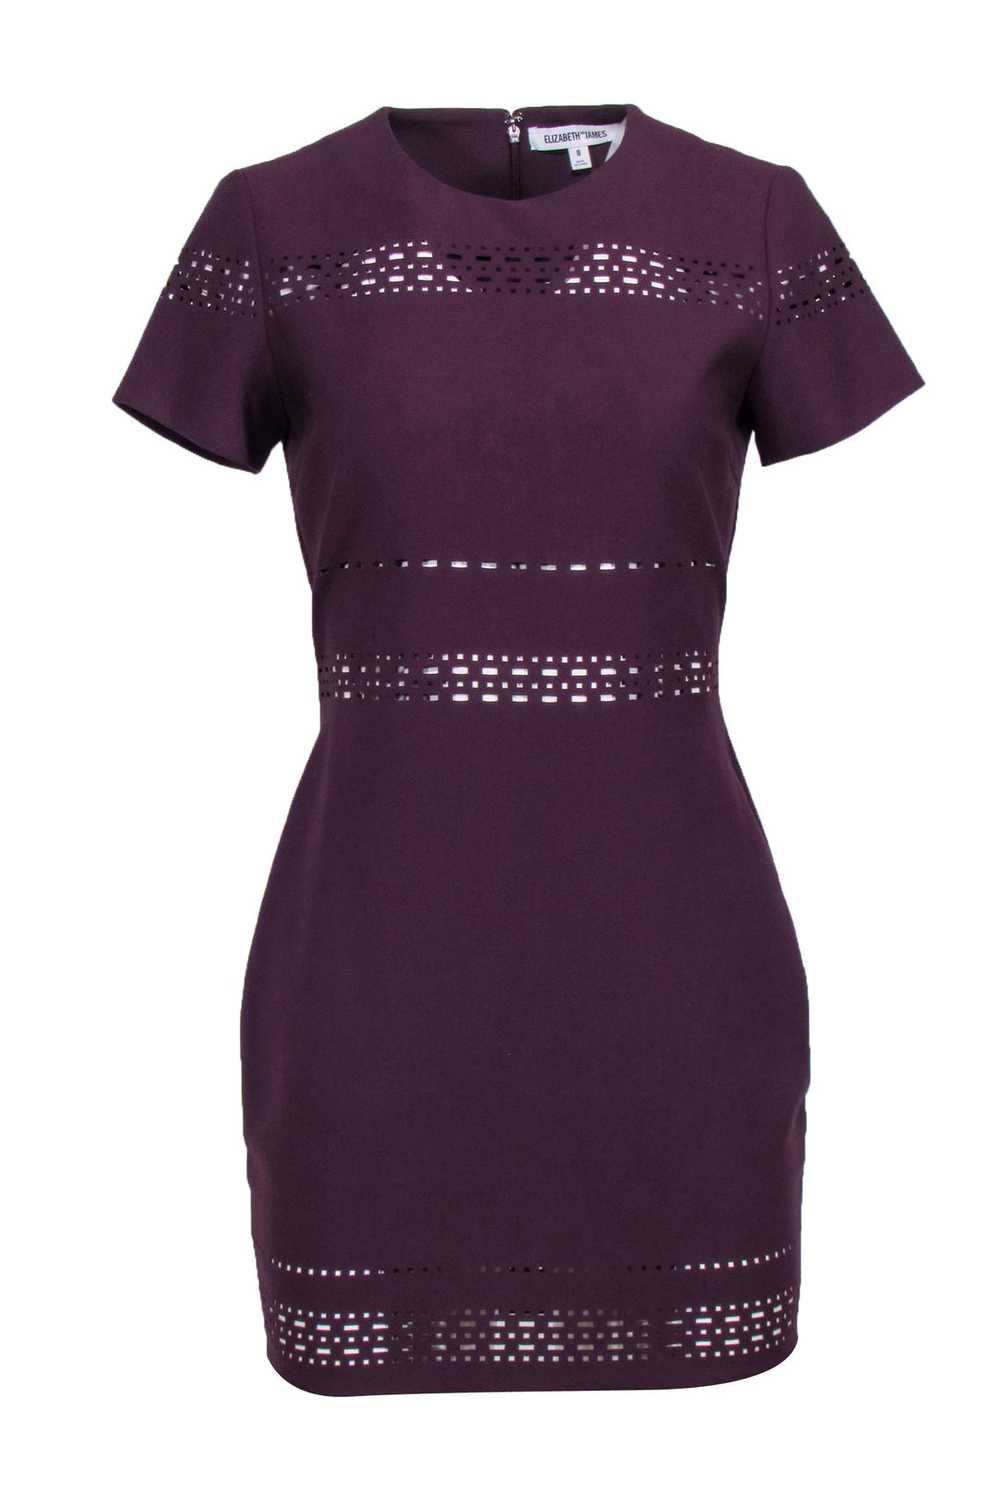 Elizabeth & James - Plum Purple “Ari” Dress w/ La… - image 1